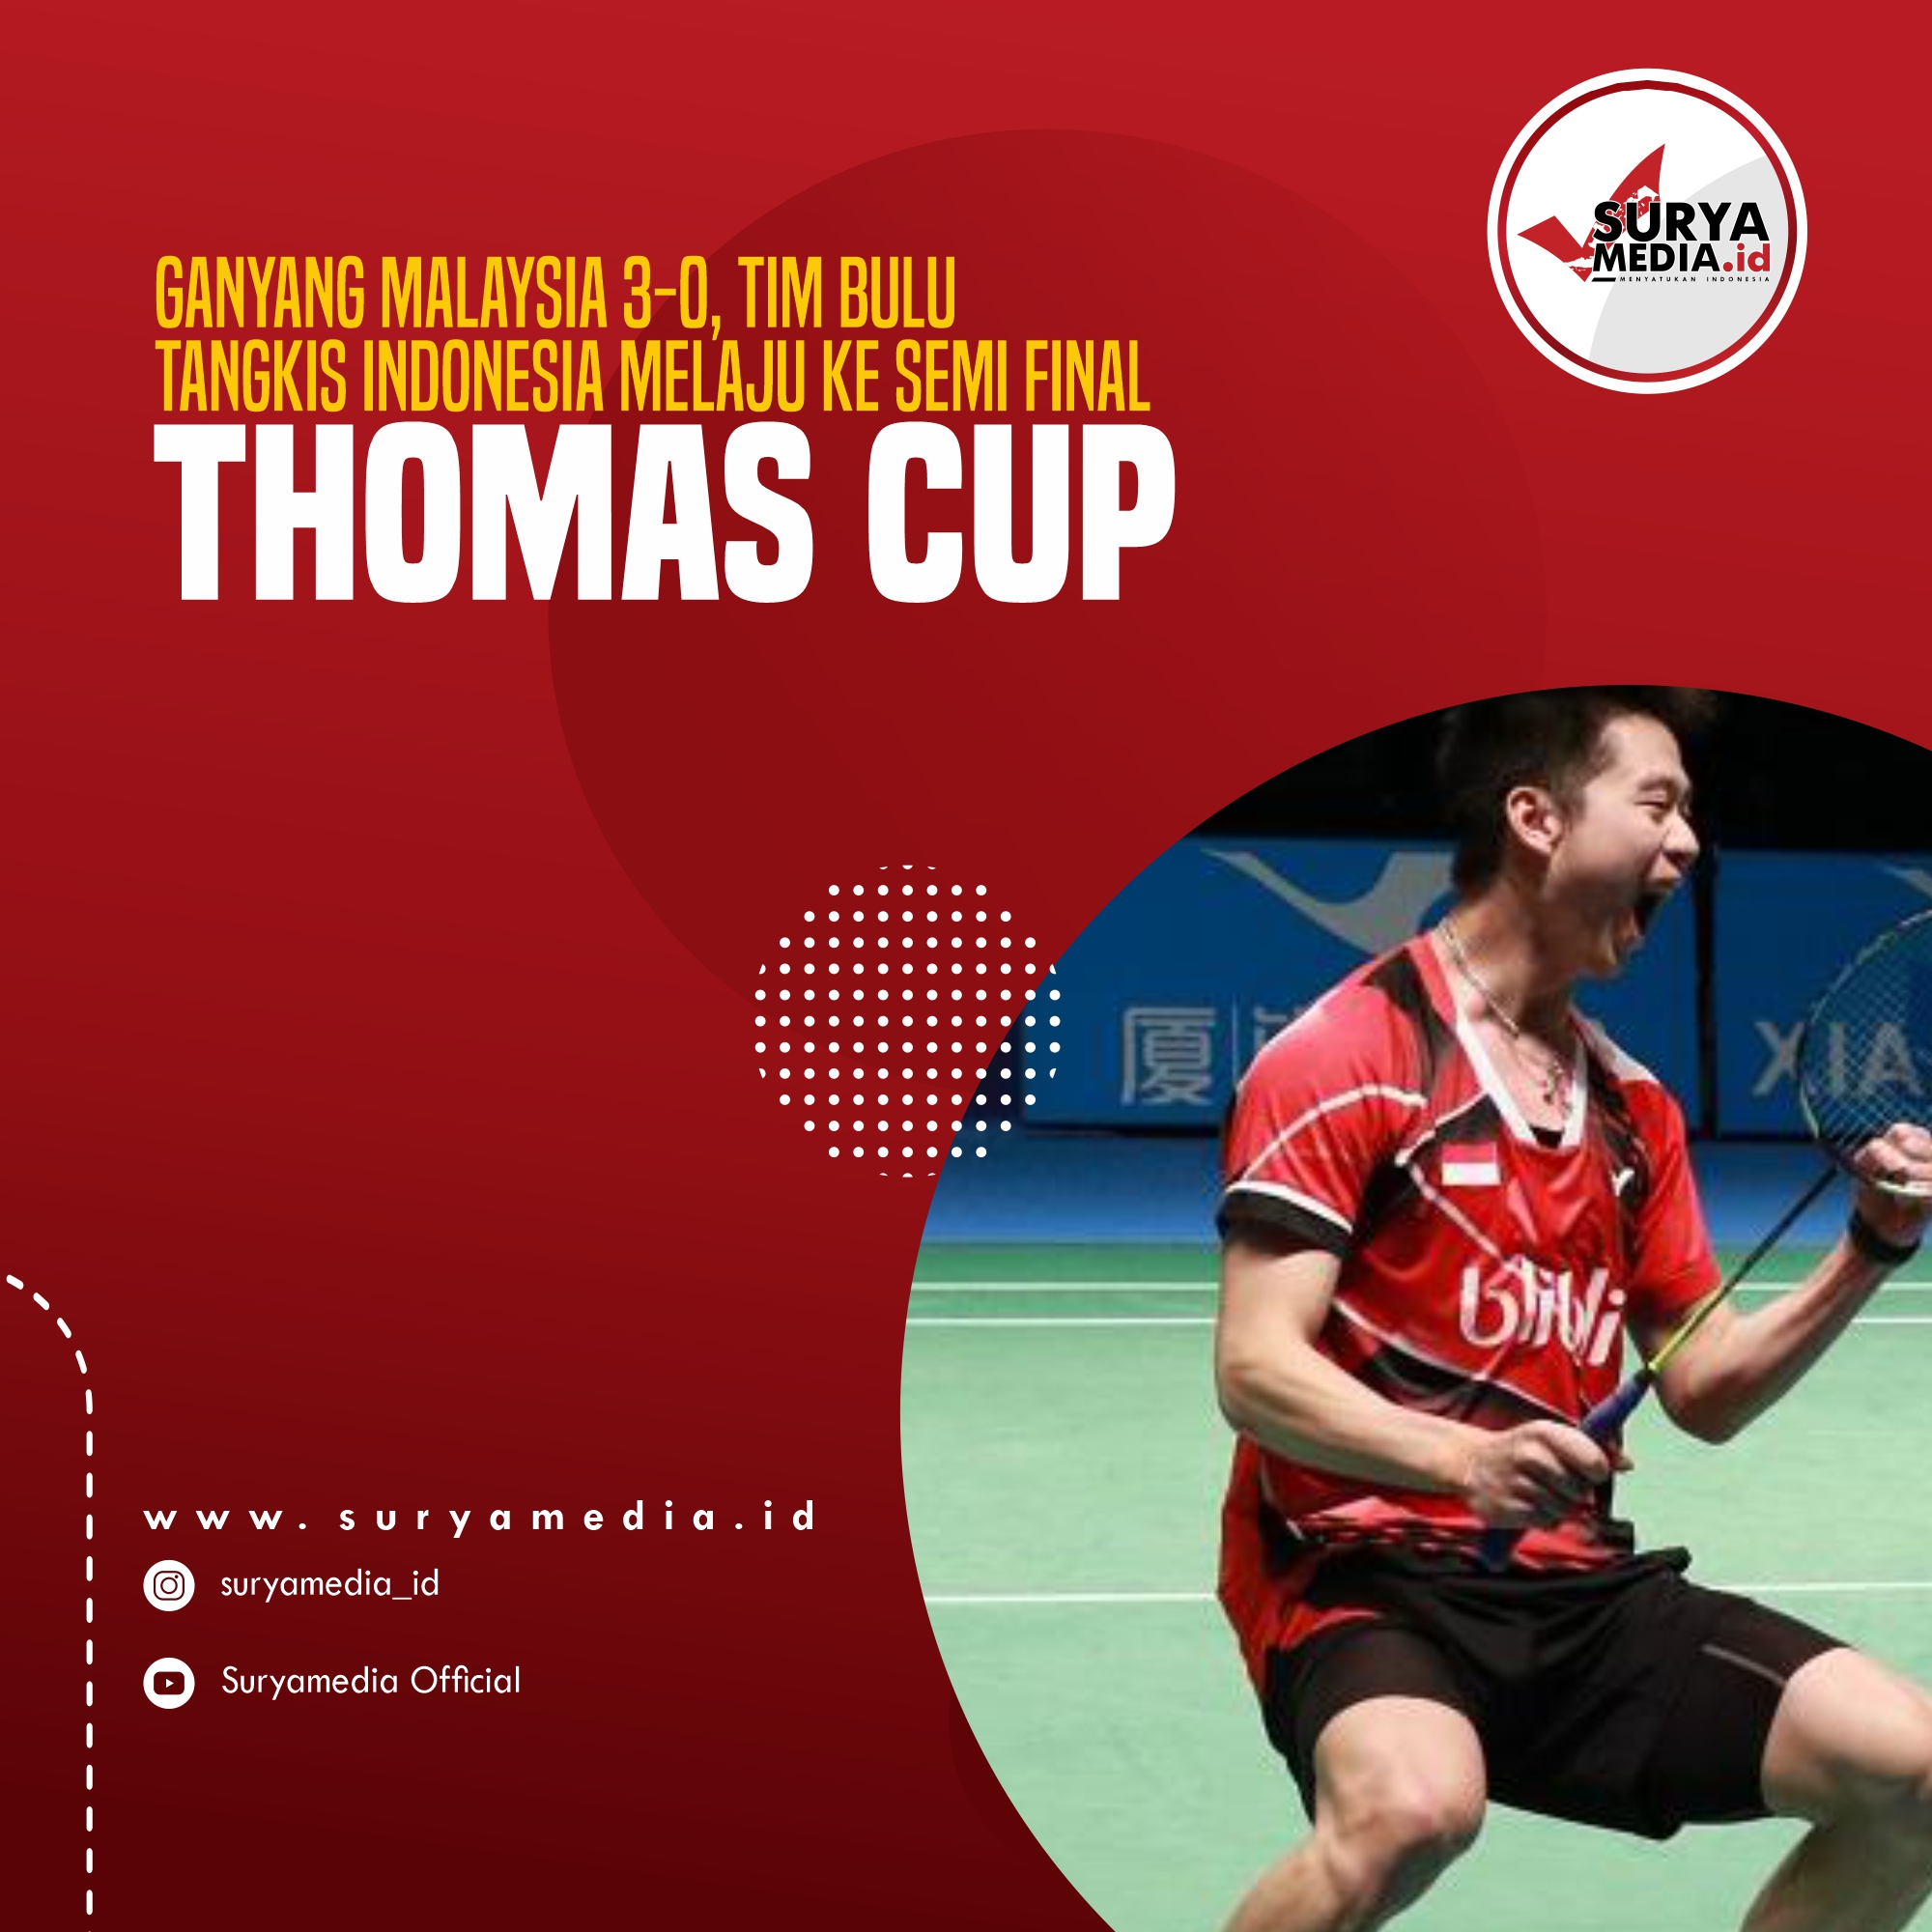 Ganyang Malaysia 3-0, Tim Bulu Tangkis Indonesia Melaju ke Semi Final Thomas Cup